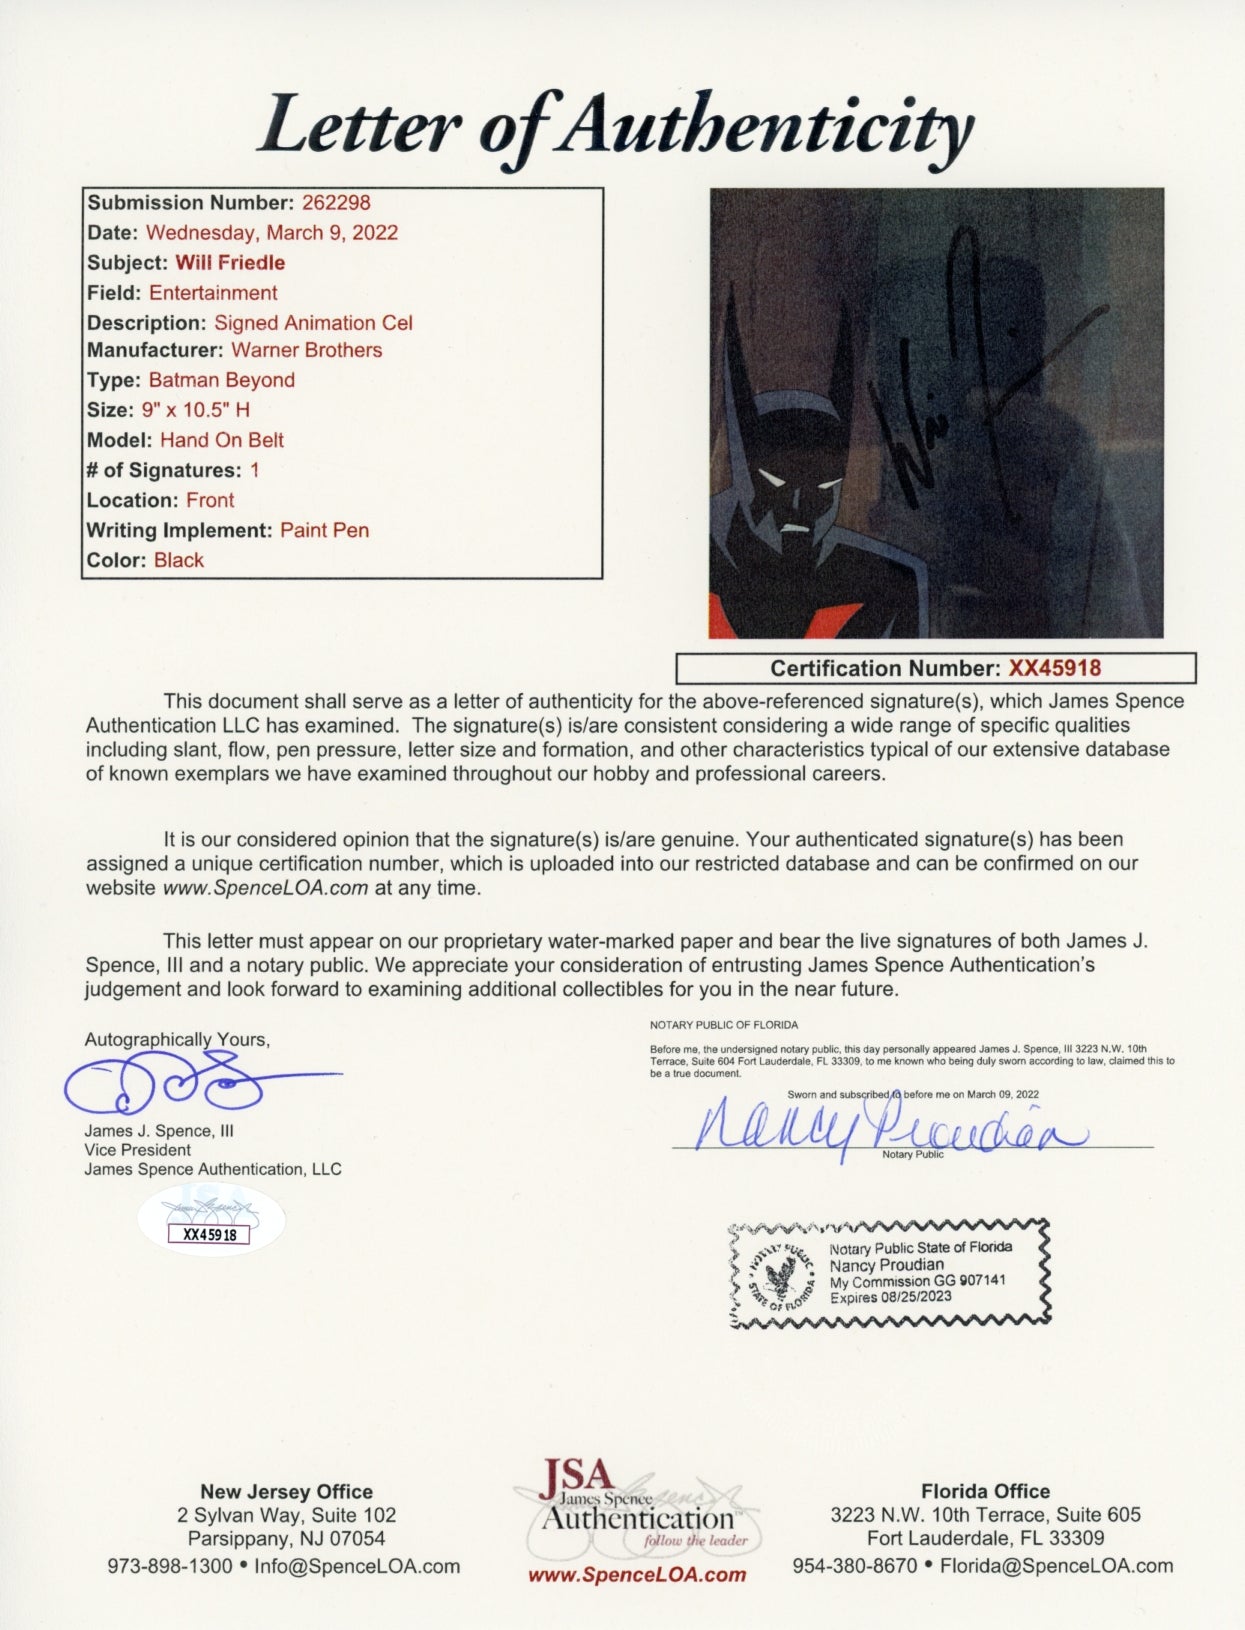 Will Friedle Batman Beyond 9x10.5 Signed Animation Production Cel JSA LOA COA Certified Autograph